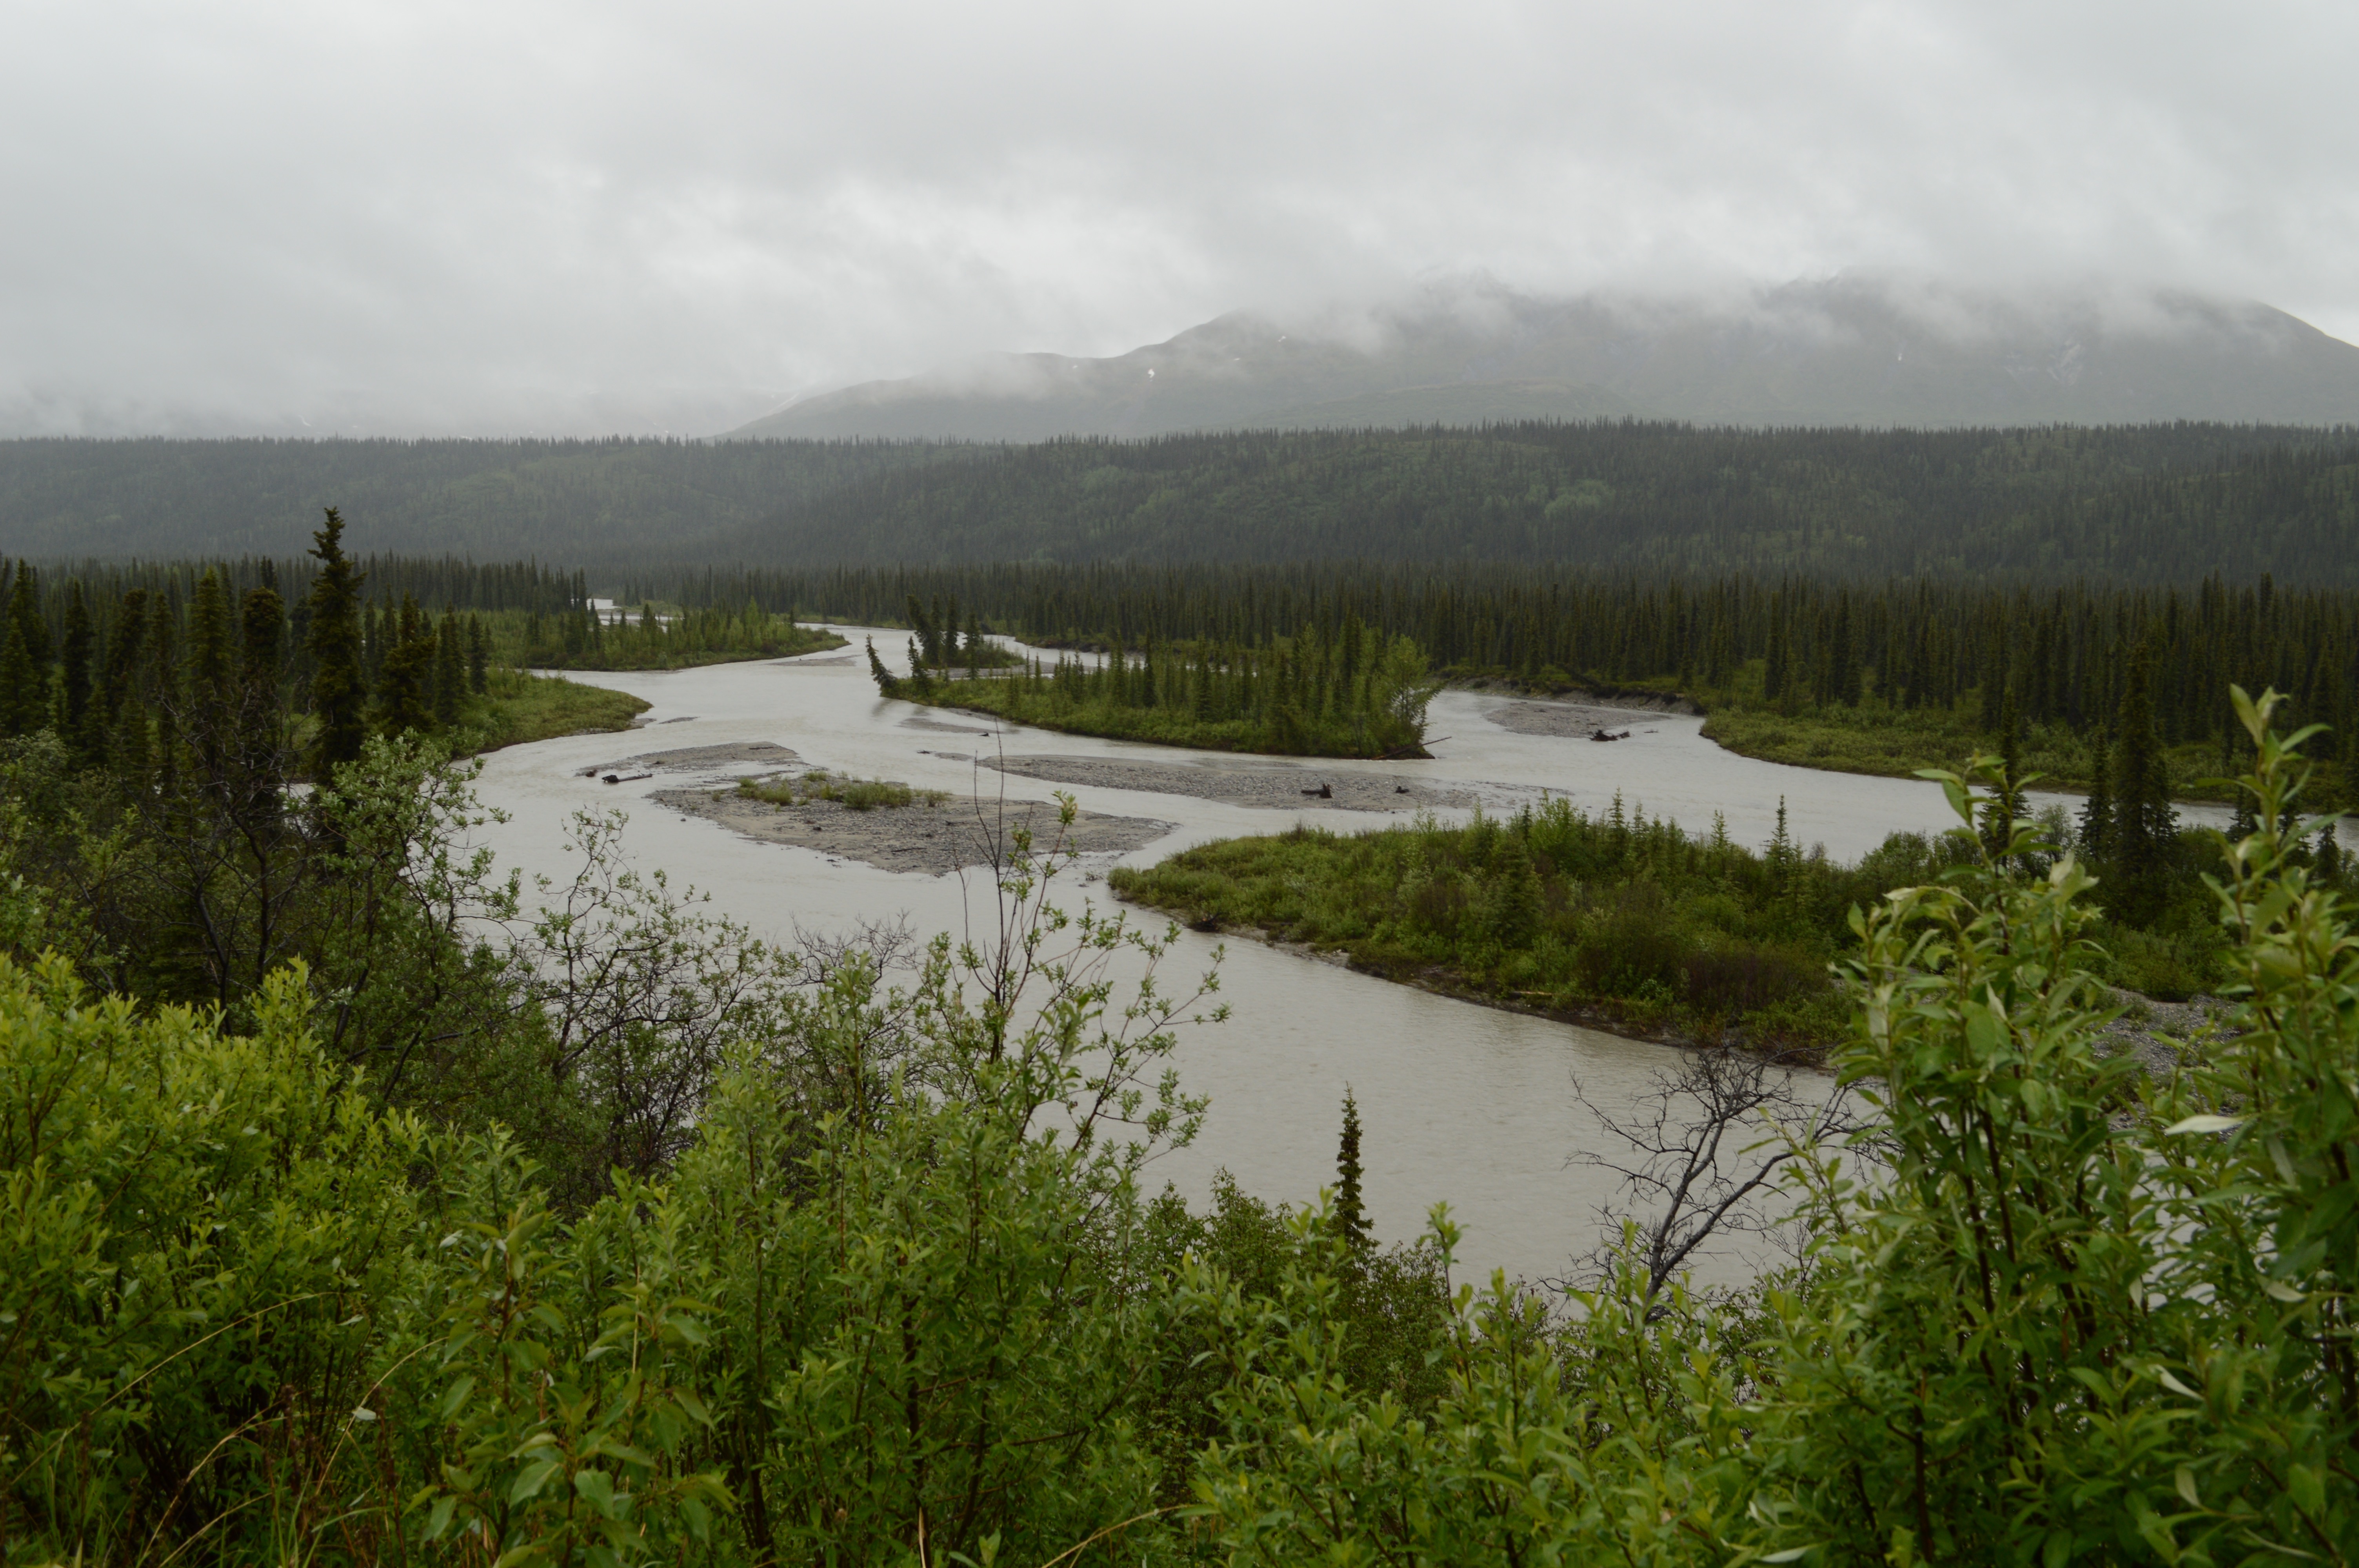 25 Photos to Make You Fall in Love with Alaska pebblepirouette.com #alaska #photos #photography #nature #travel #wildlife